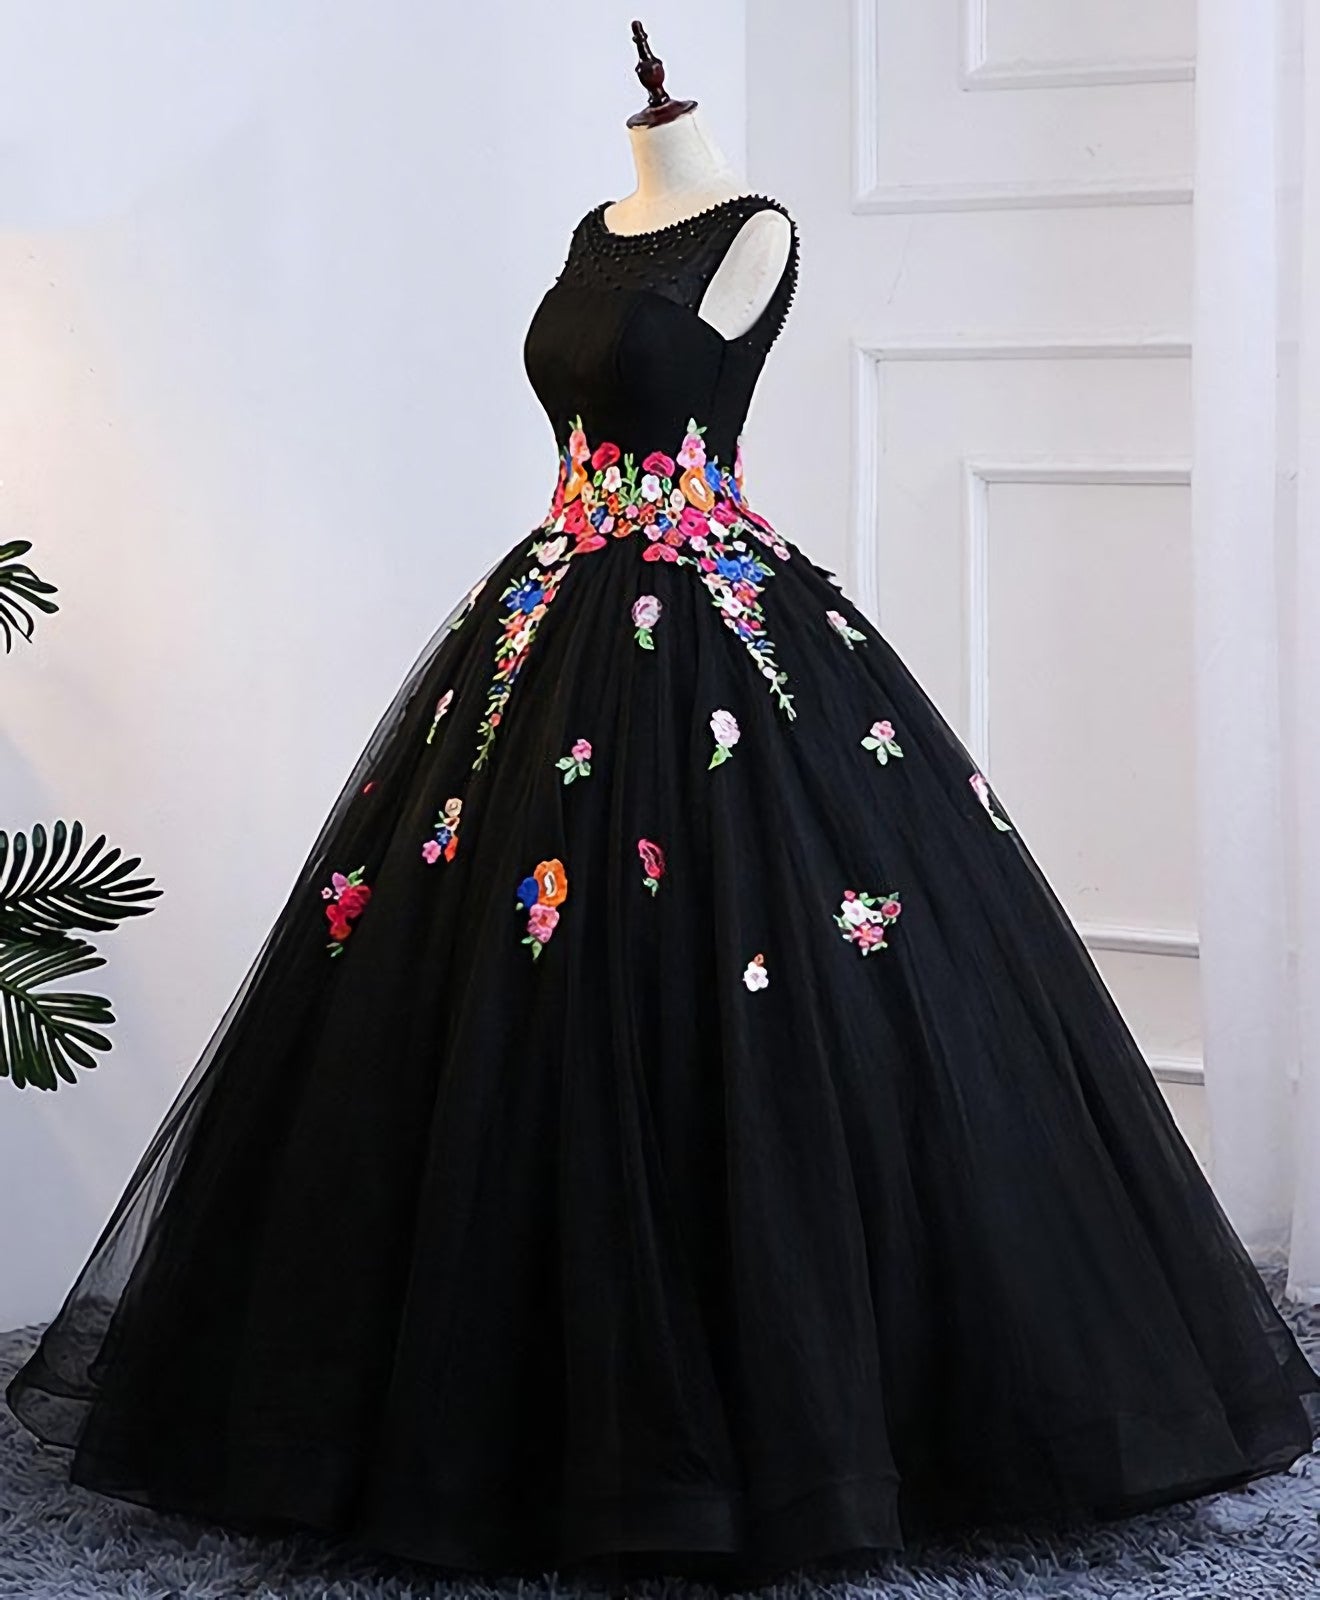 Bridesmaids Dresses Blush Pink, Black Tulle Long Prom Gown Black Evening Dress